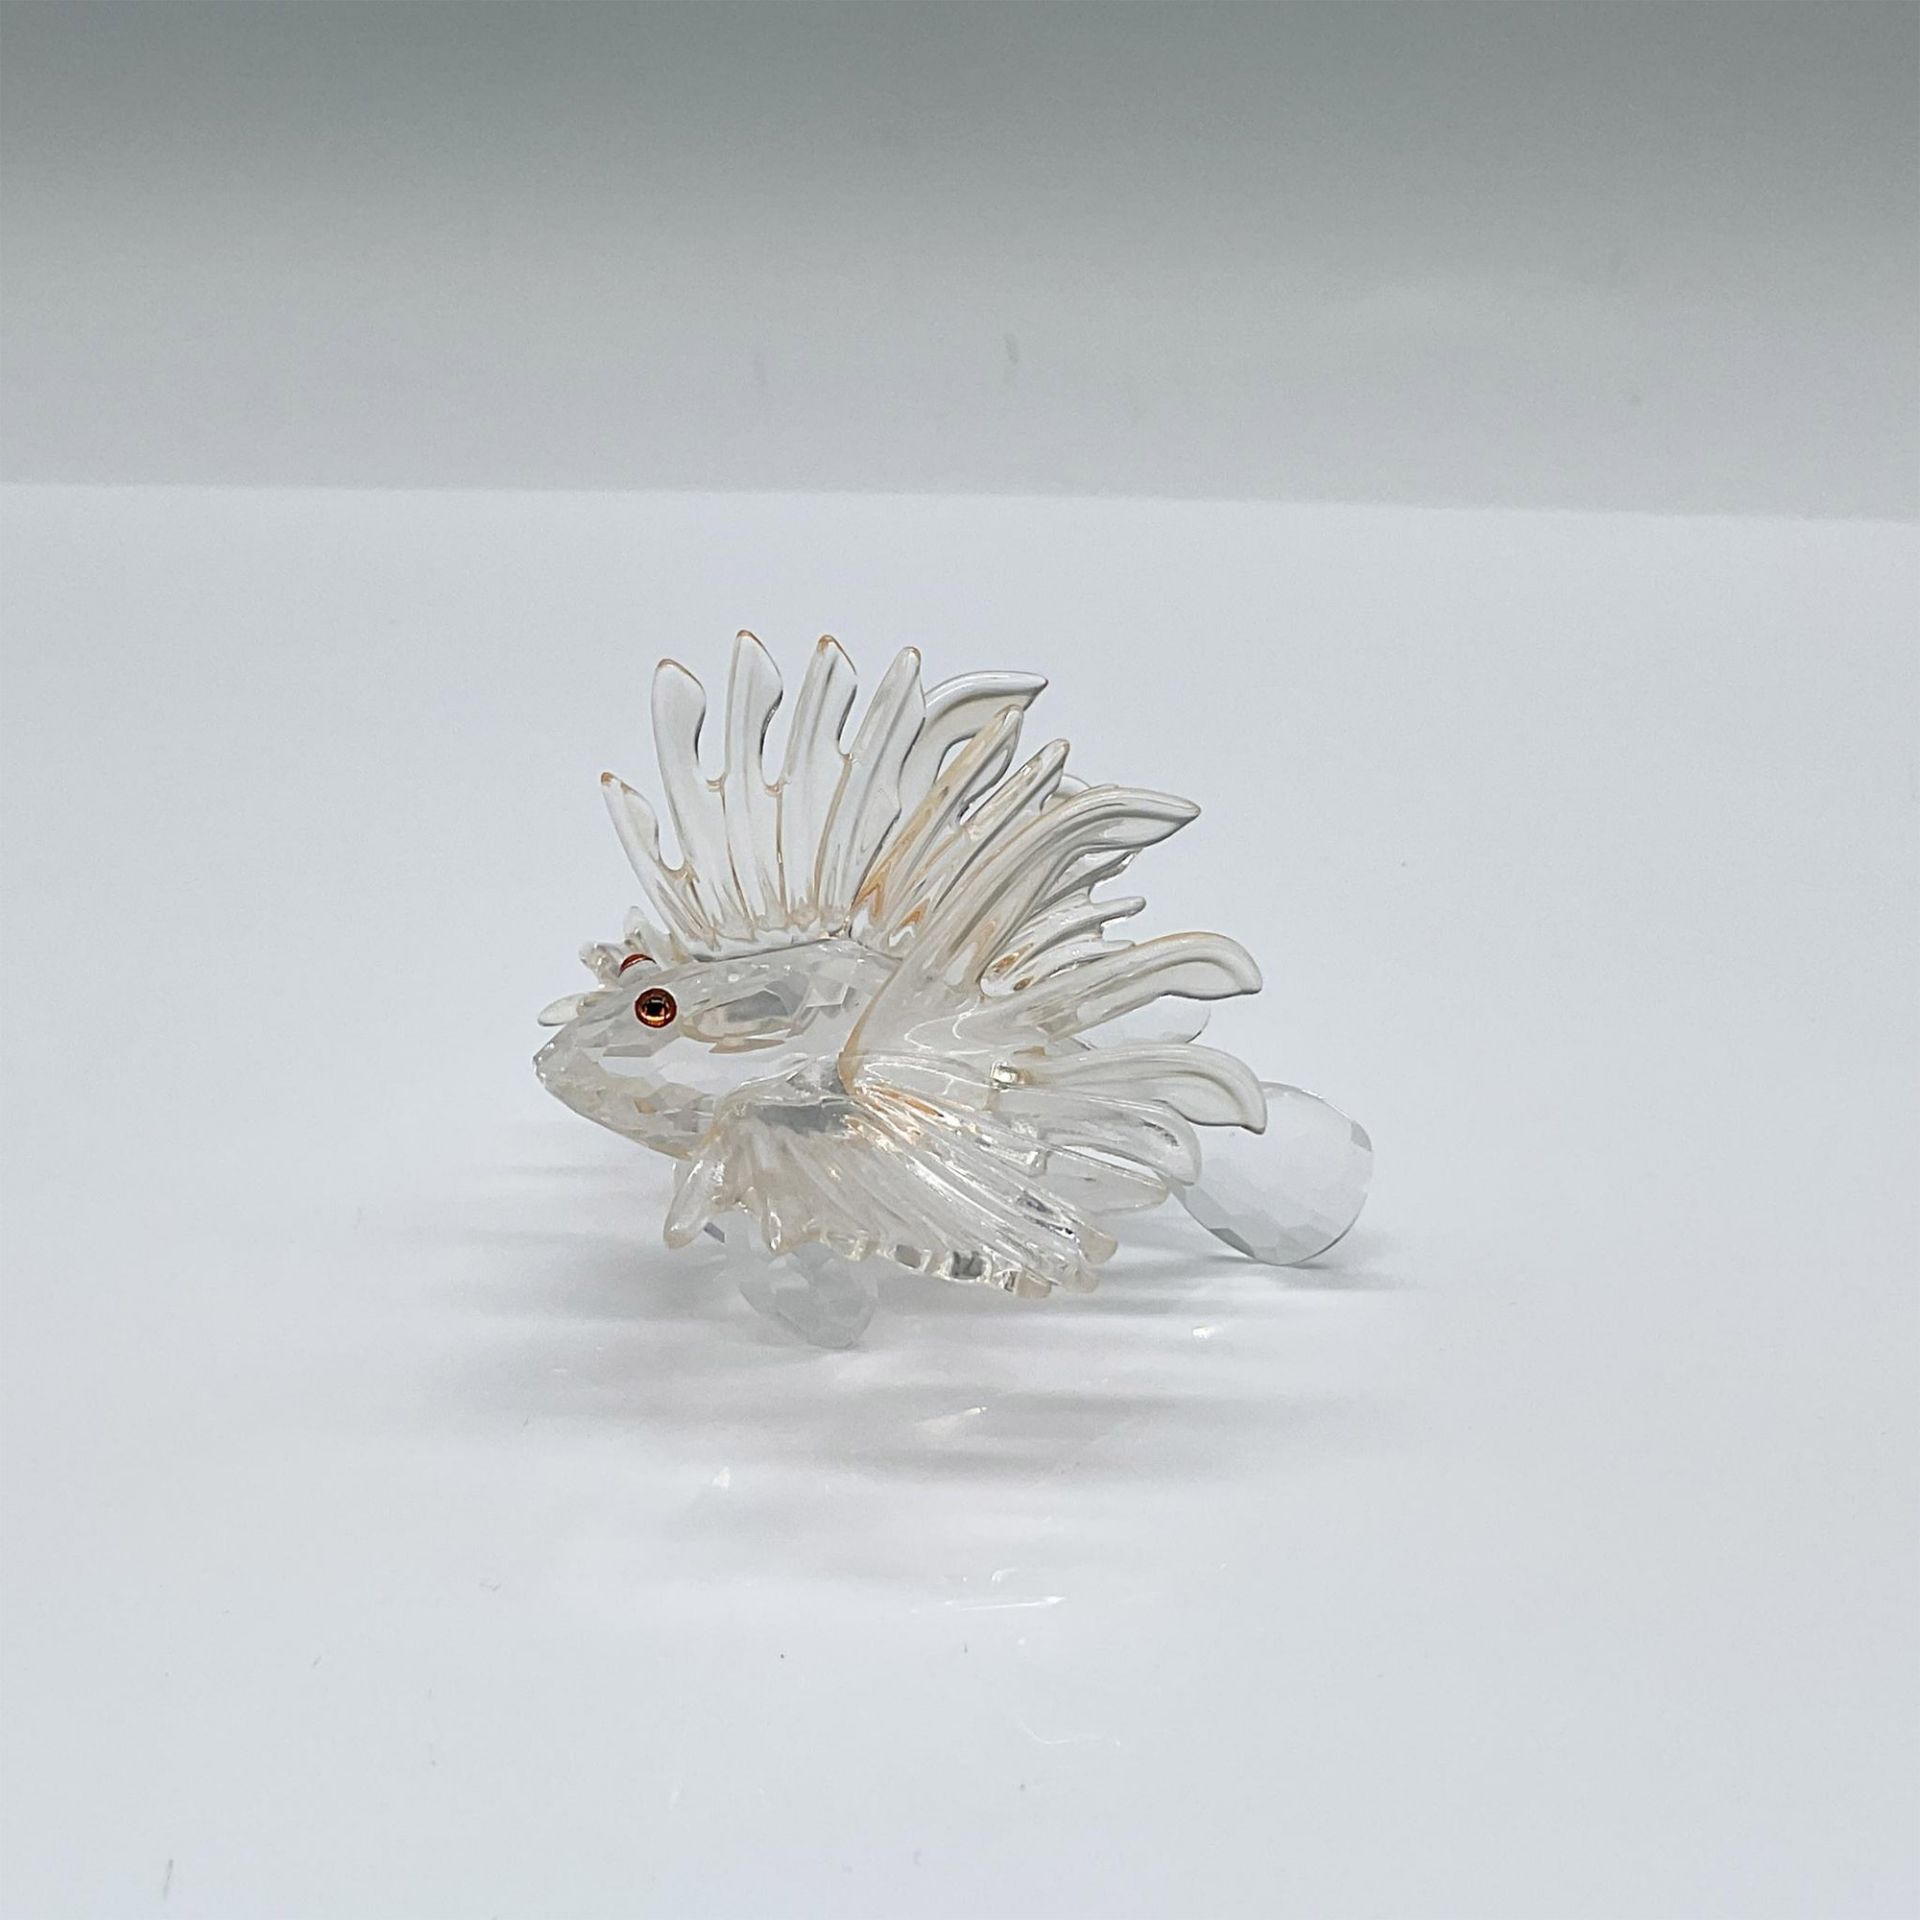 Swarovski Crystal Figurine, Lion Fish